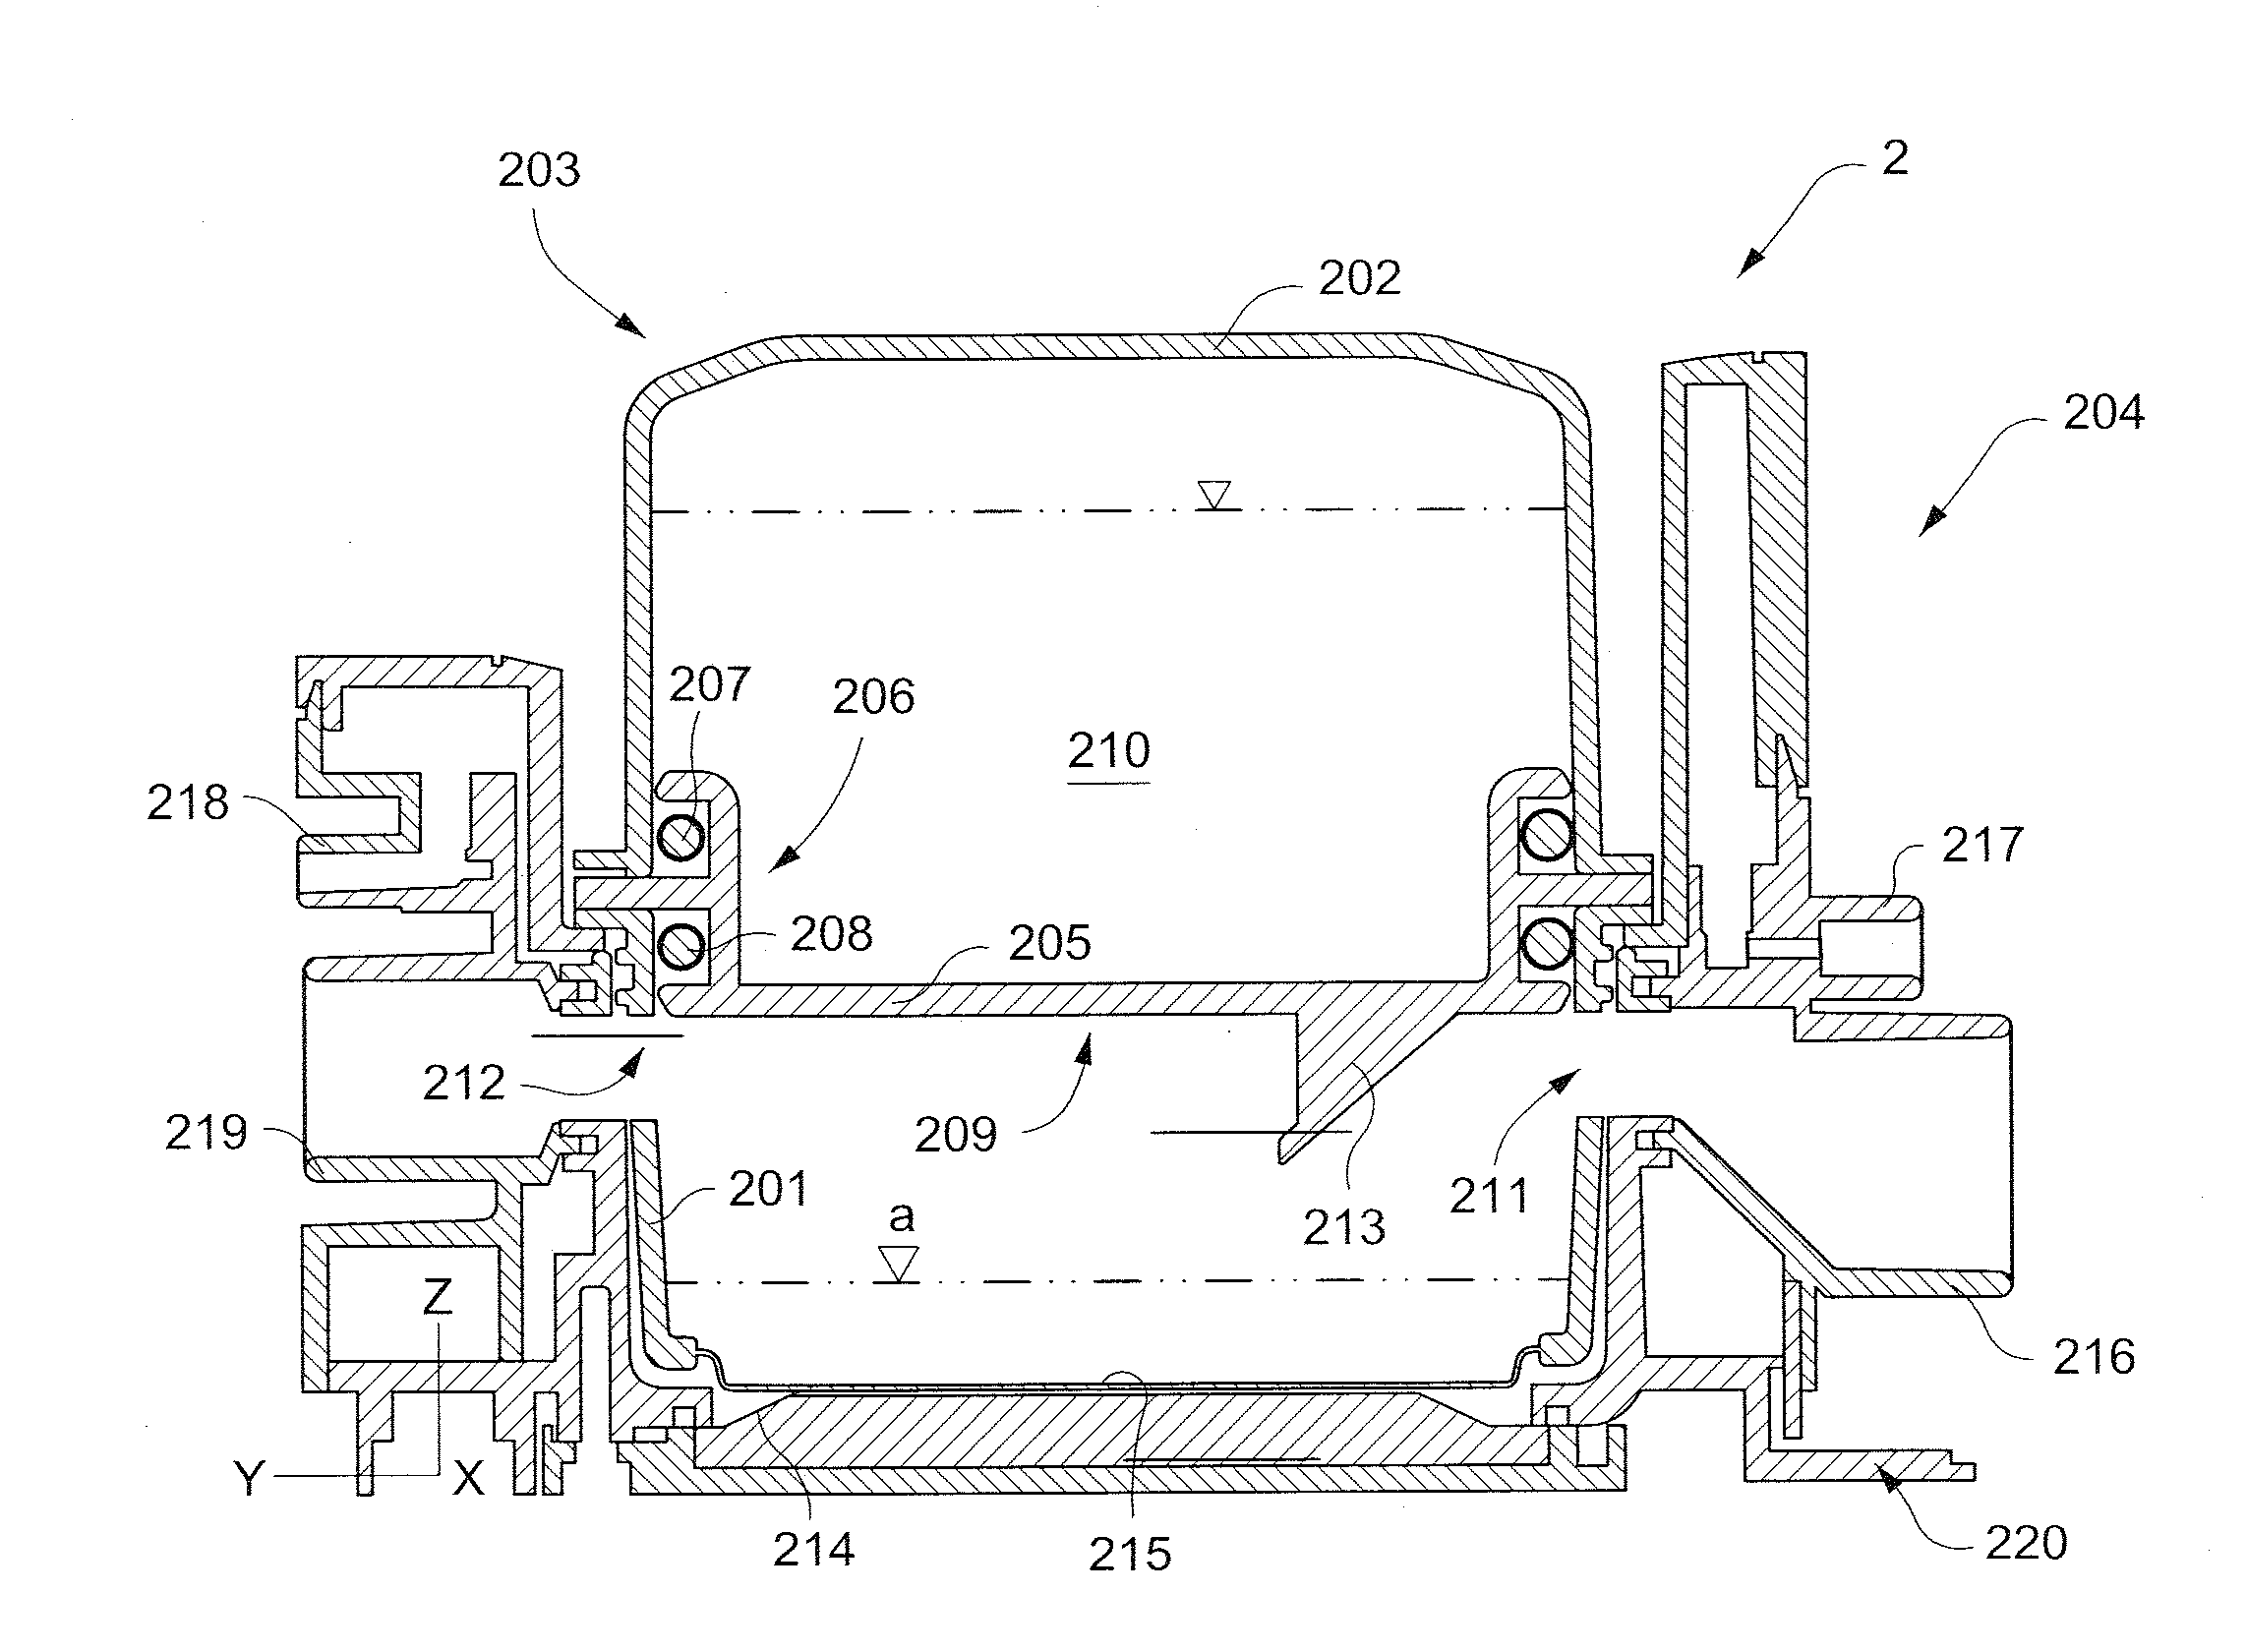 Apparatus for humidifying a respiratory gas